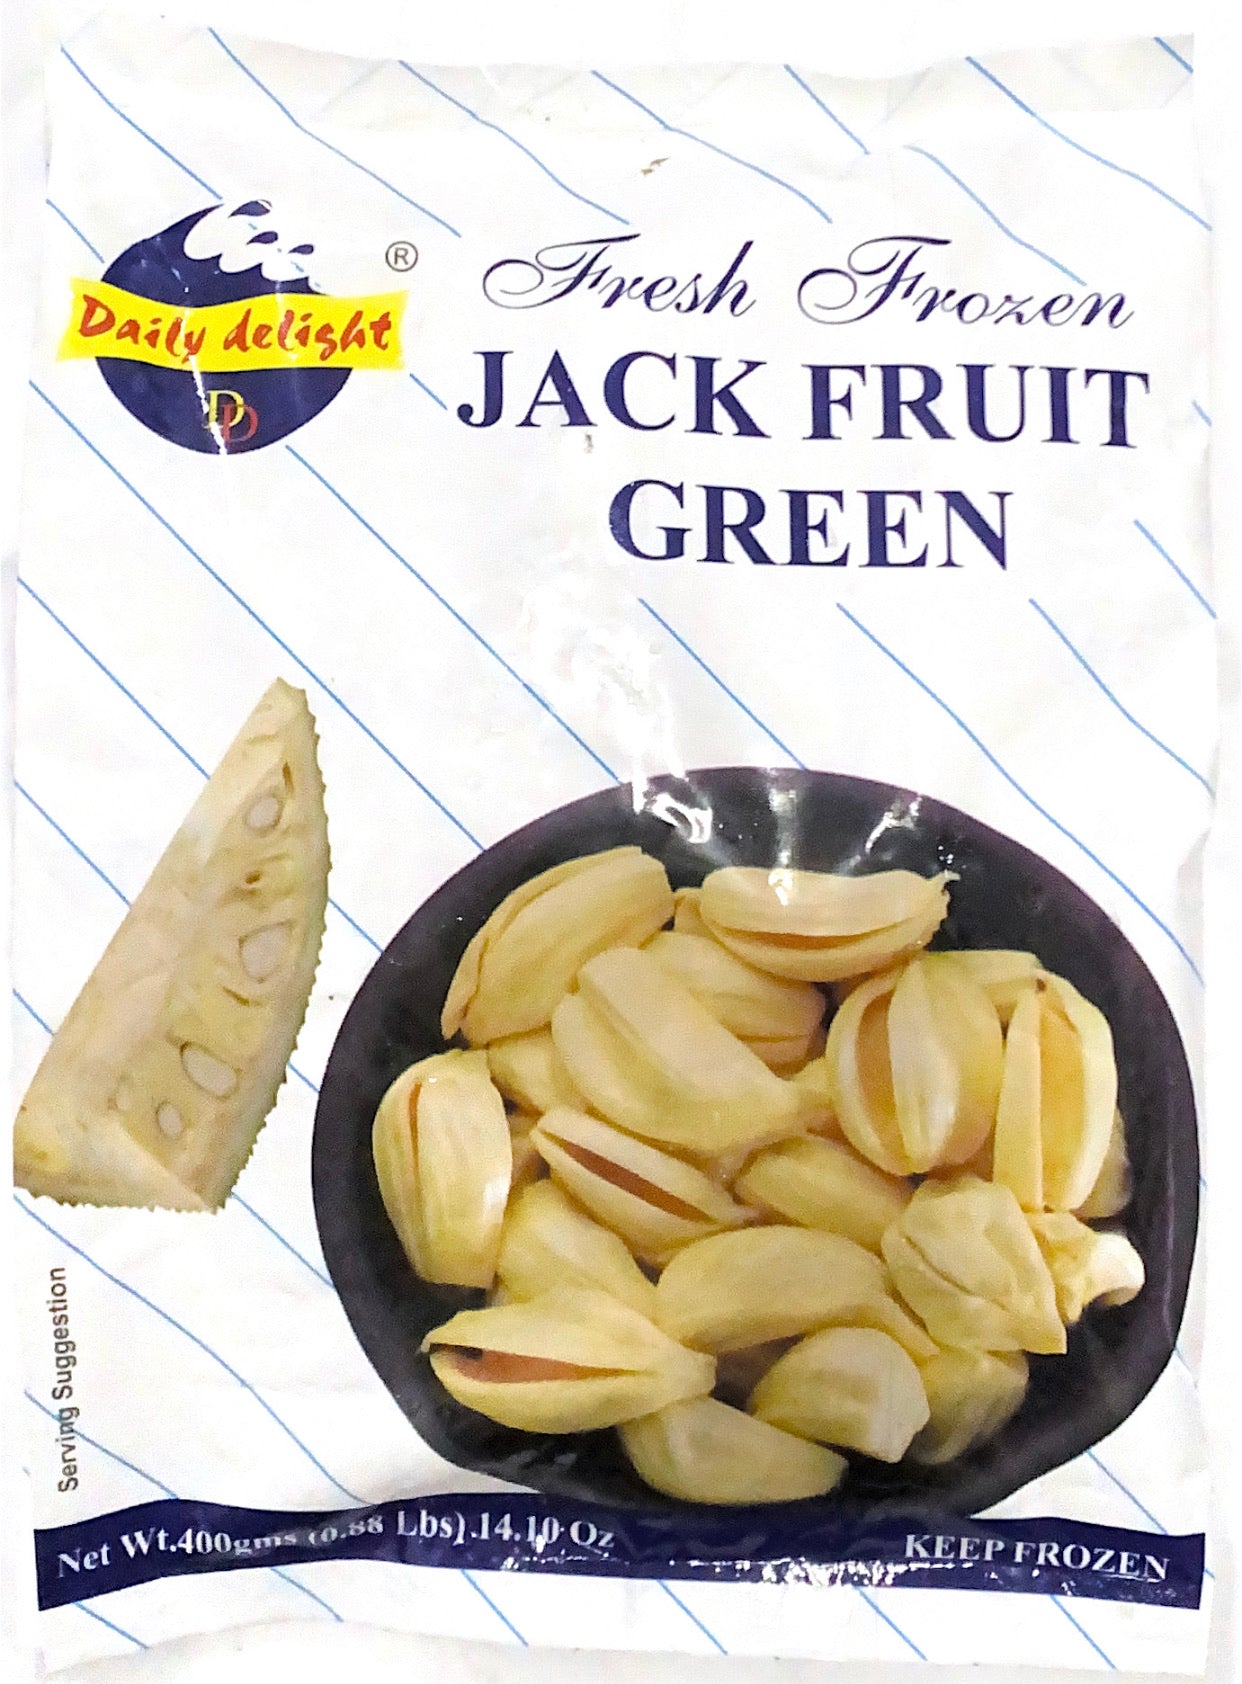 Jack Fruit Green